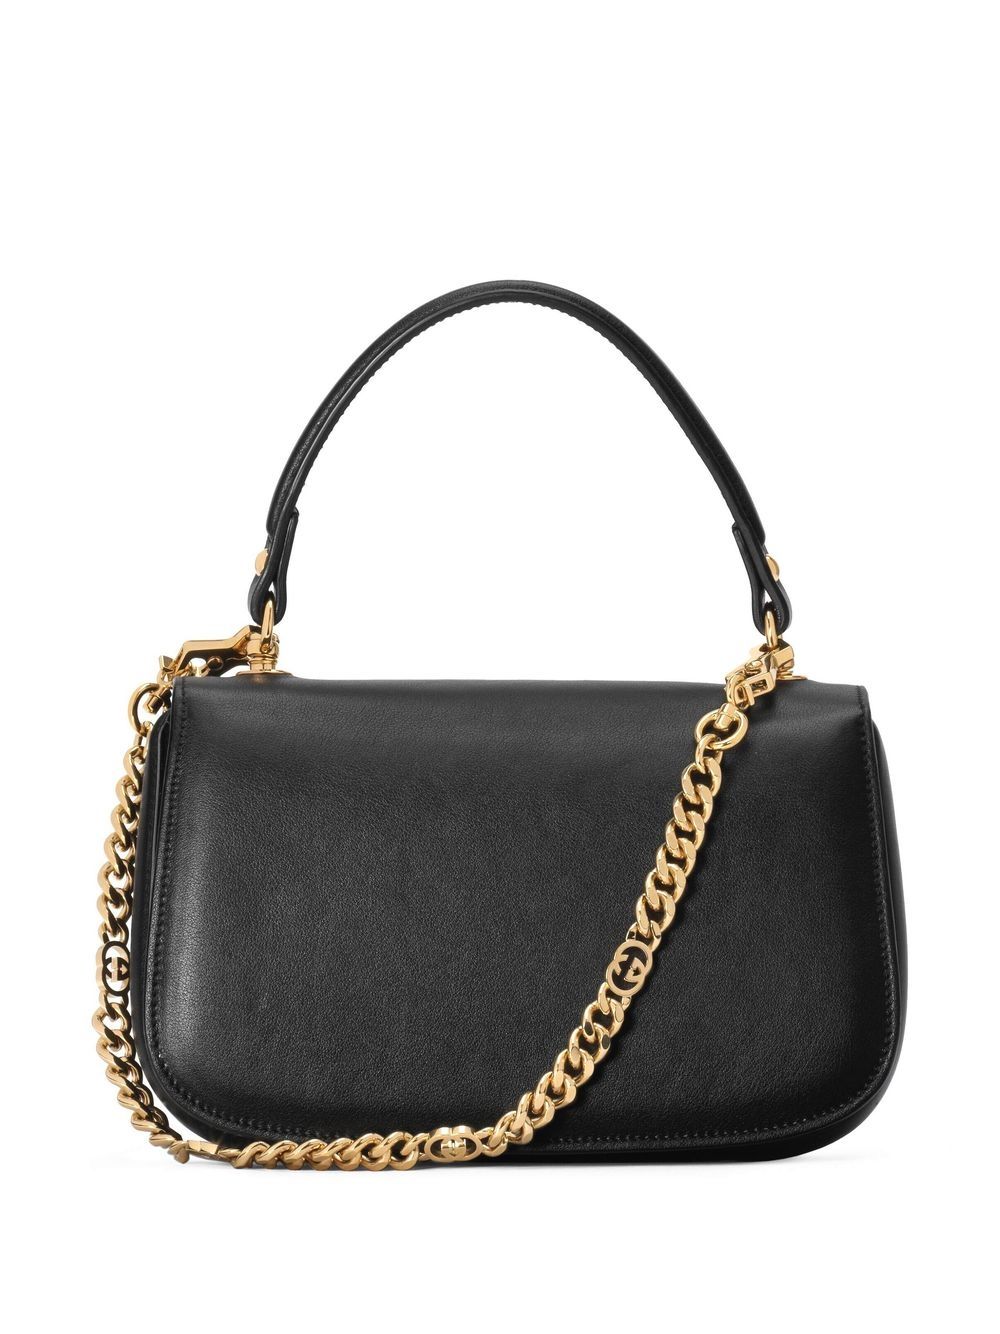 Gucci Blondie Top Handle Bag In Schwarz | ModeSens